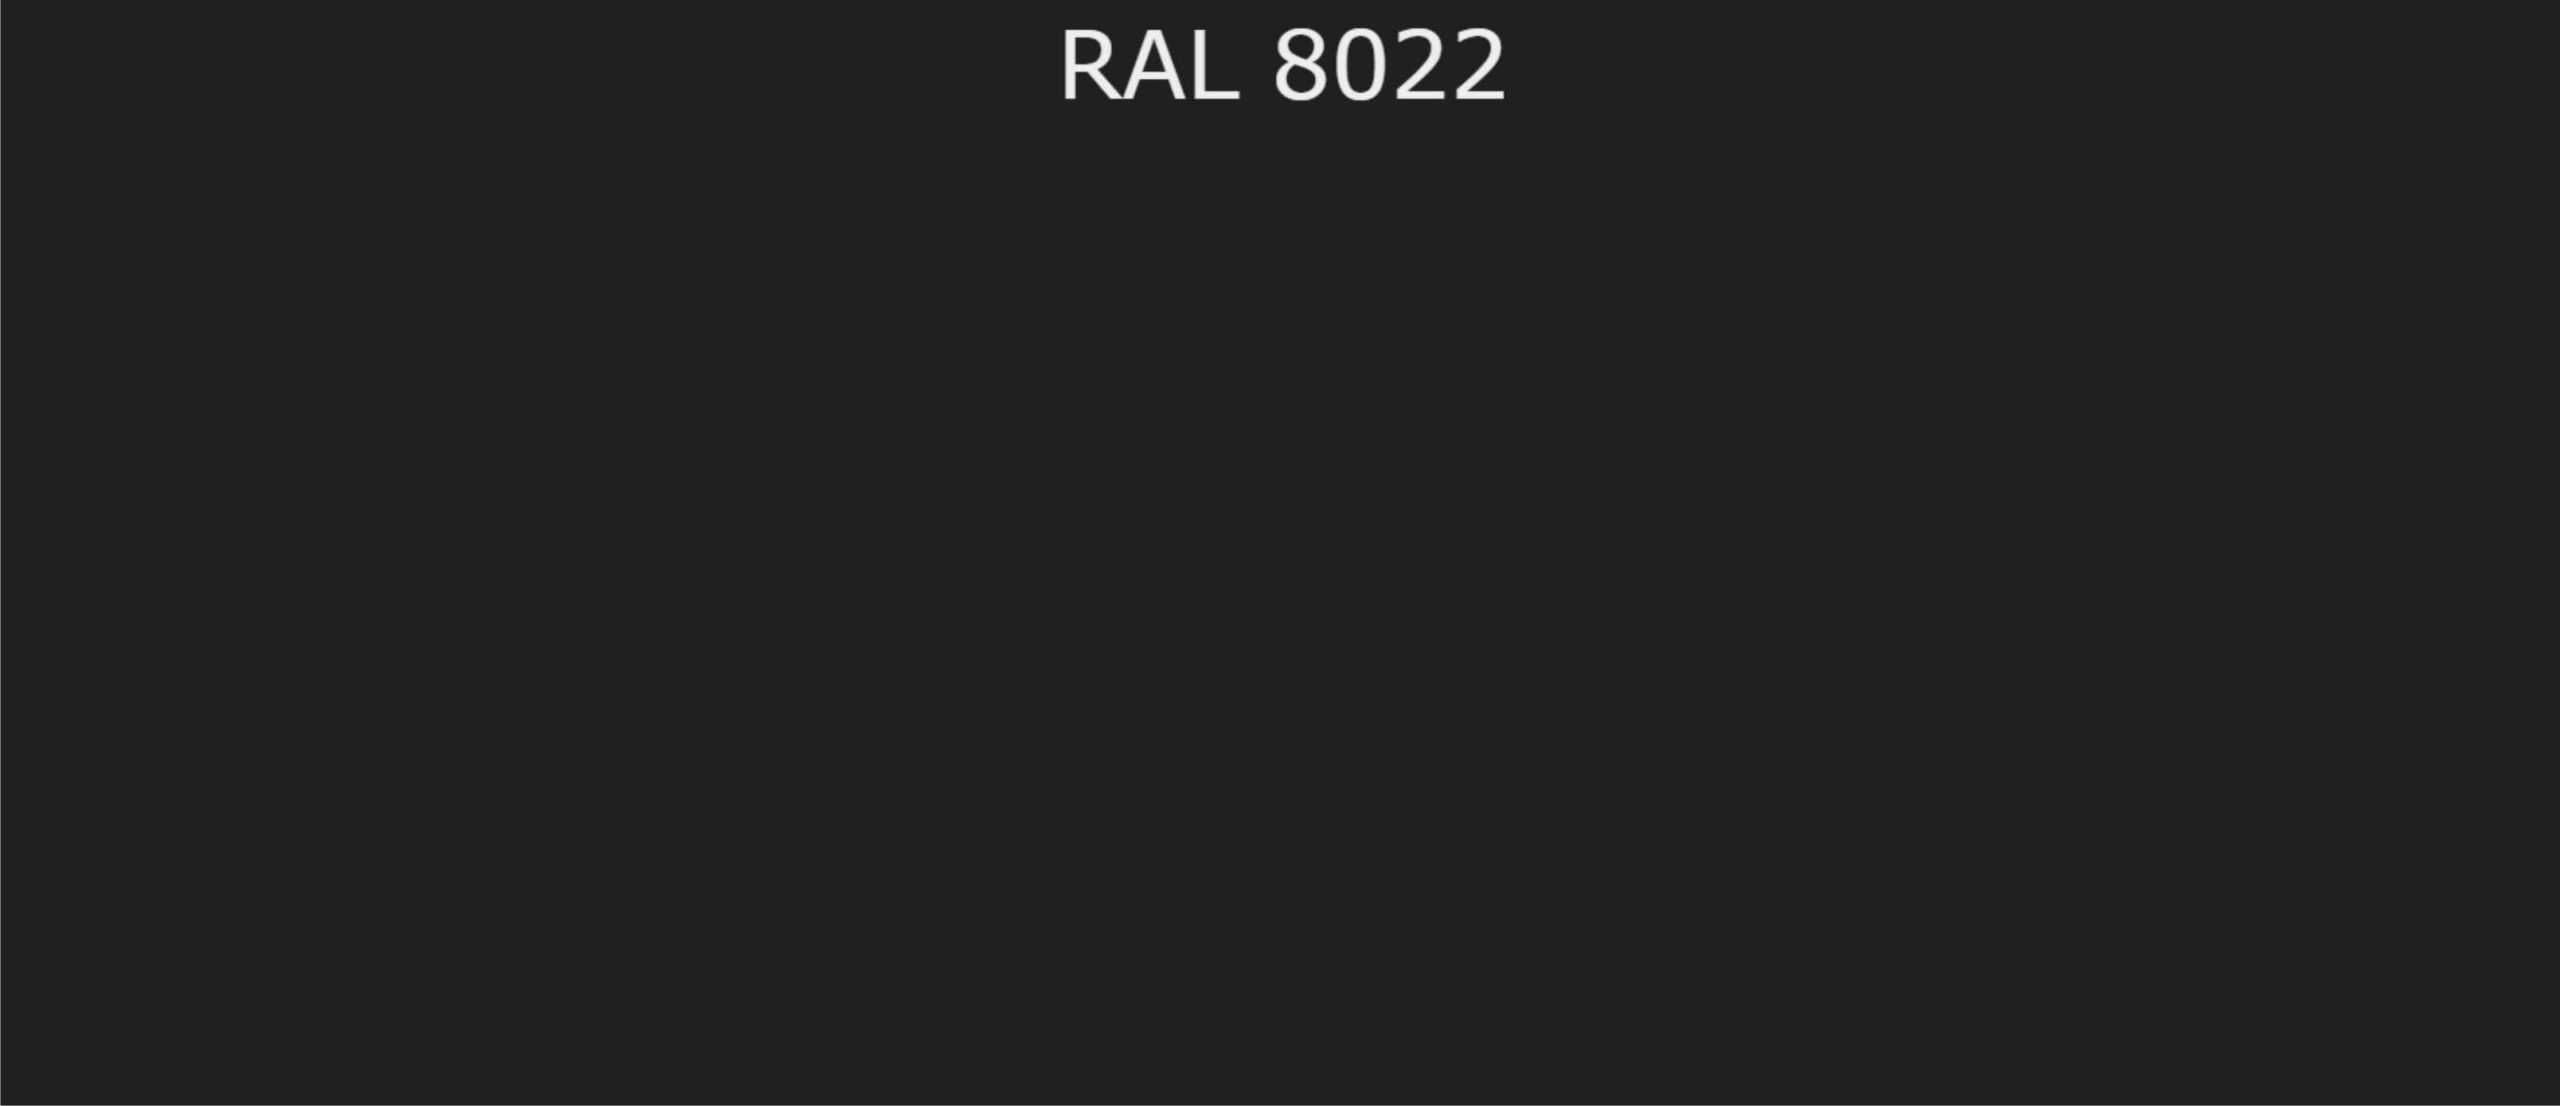 Ral 7024 какой. Темно-коричневый рал 8022. Пурал (полиуретан) лист RAL 8022. Рал венге 8022 цвет. RAL 7024 цвет.